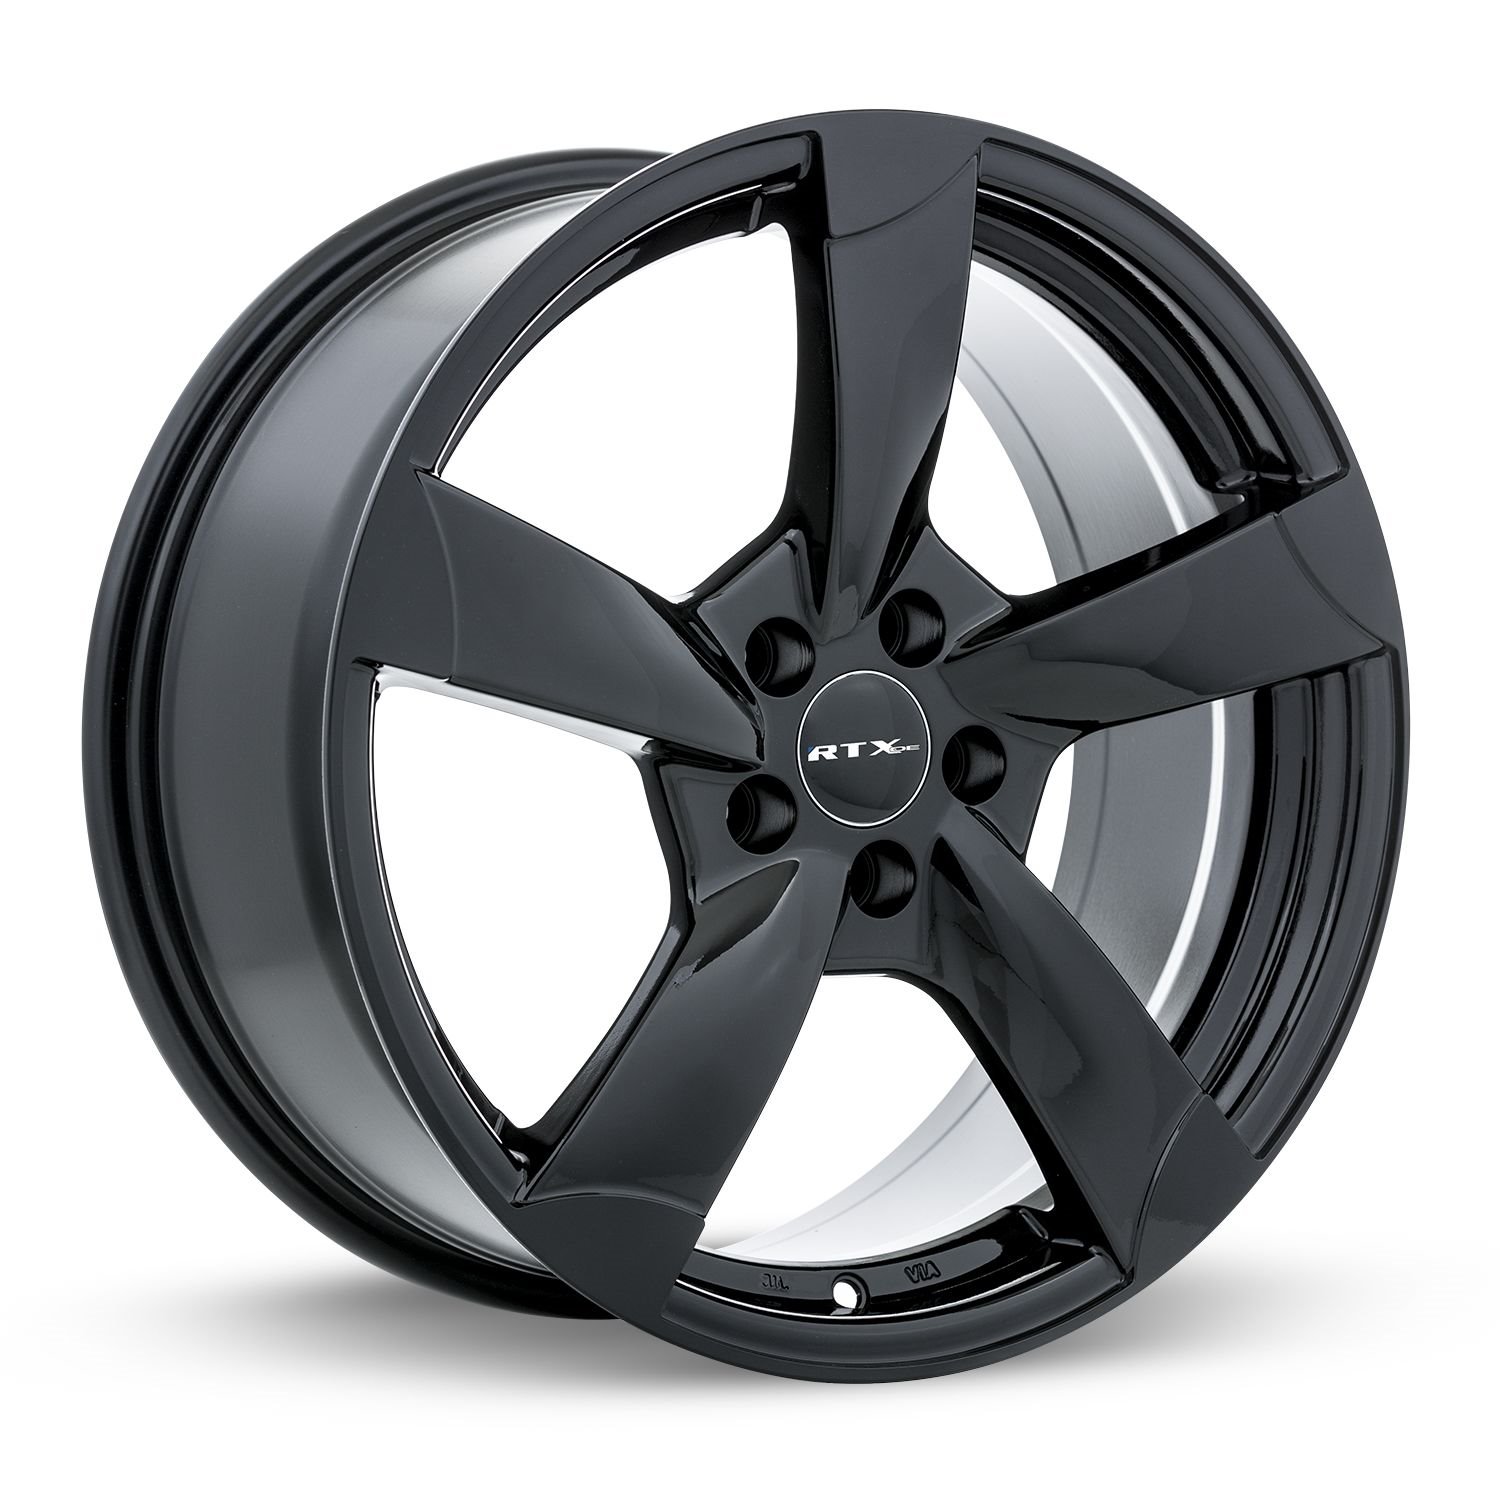 082157 OE-Series RS II Wheel [Size: 18" x 8"] Gloss Black Finish